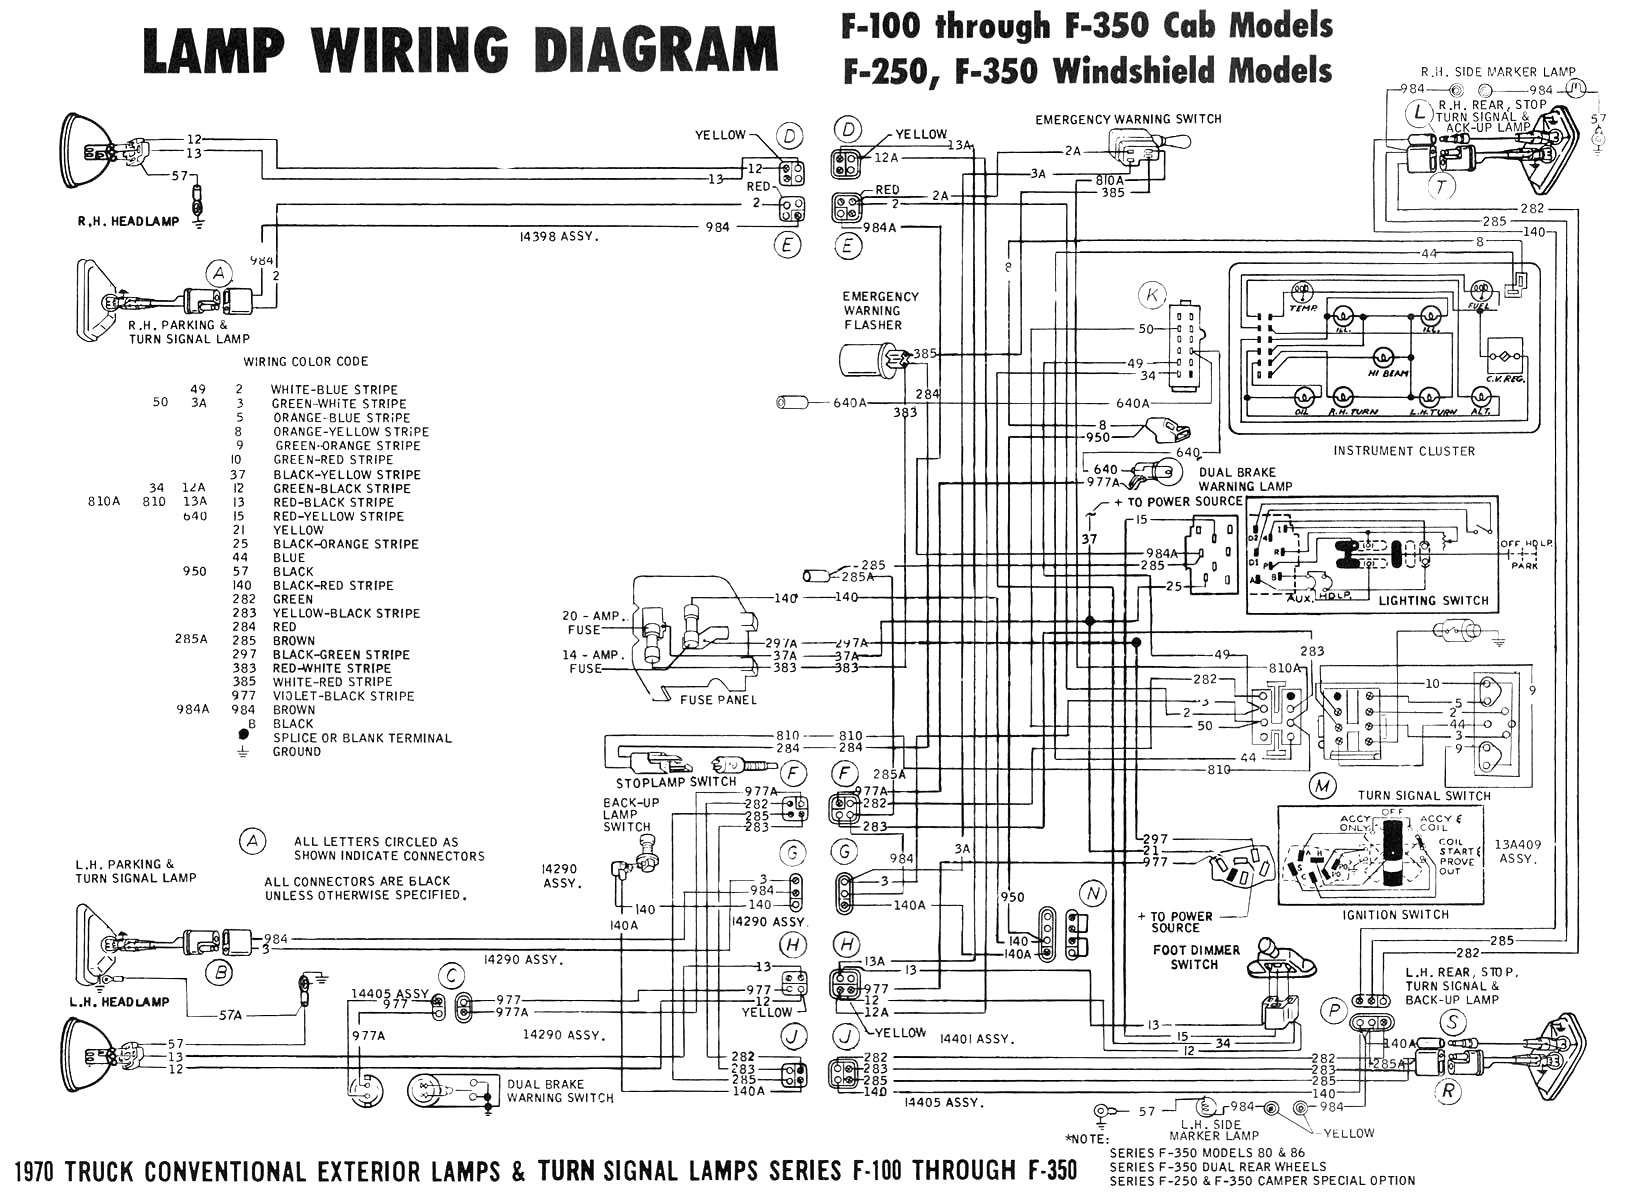 2001 e150 wiring diagram auto diagram database 2001 ford ranger windshield wiper diagram 2001 ford e150